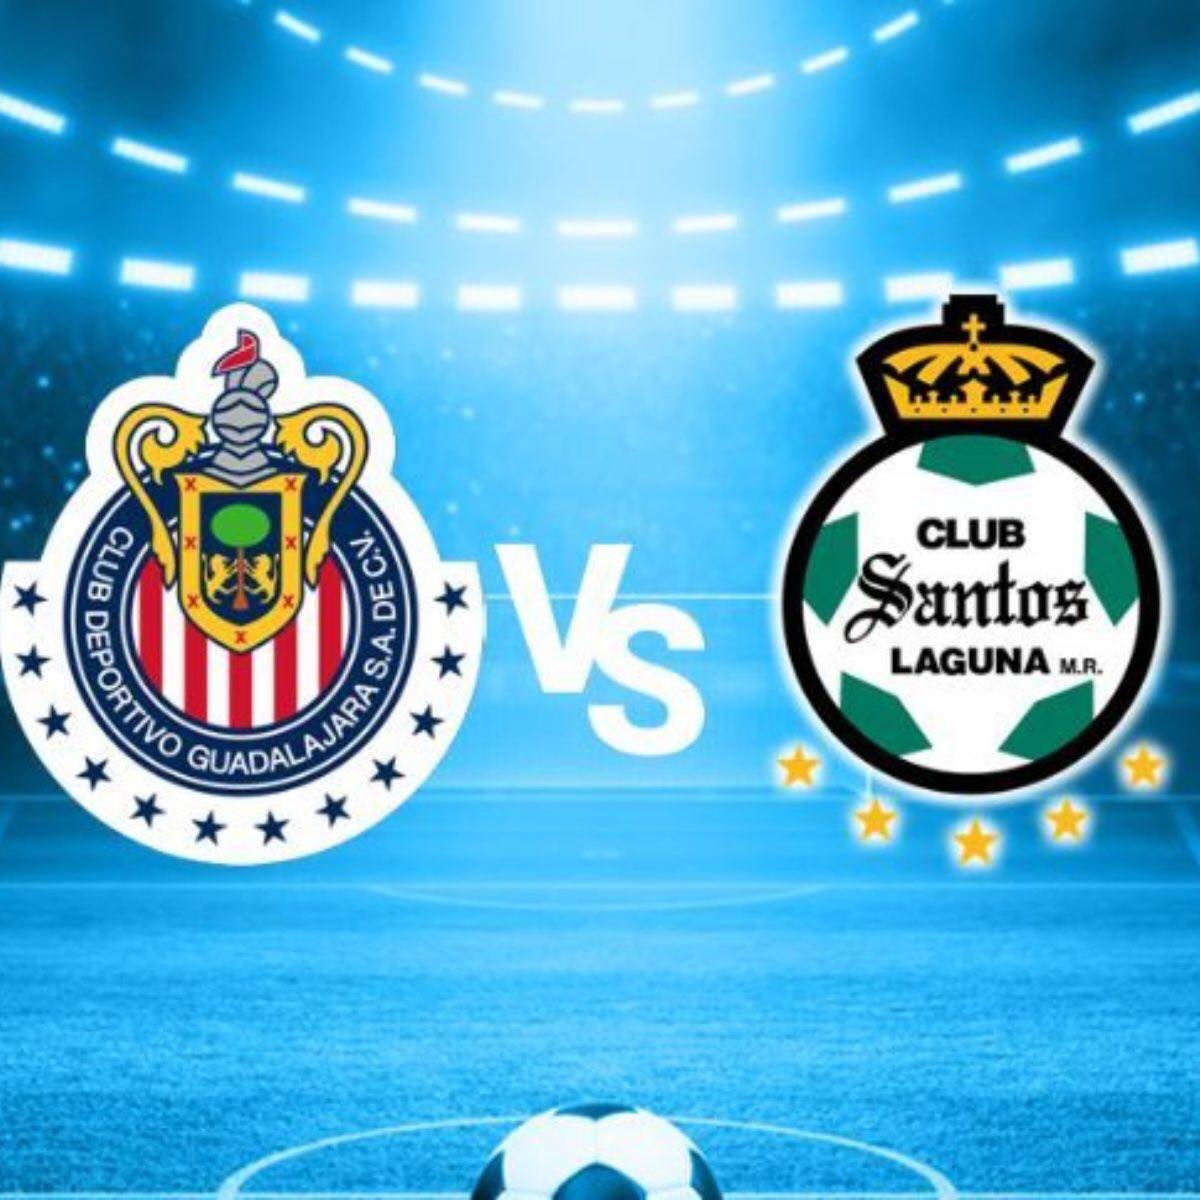 Travel to the Chivas vs Necaxa match - Saturday, April 8, 2023